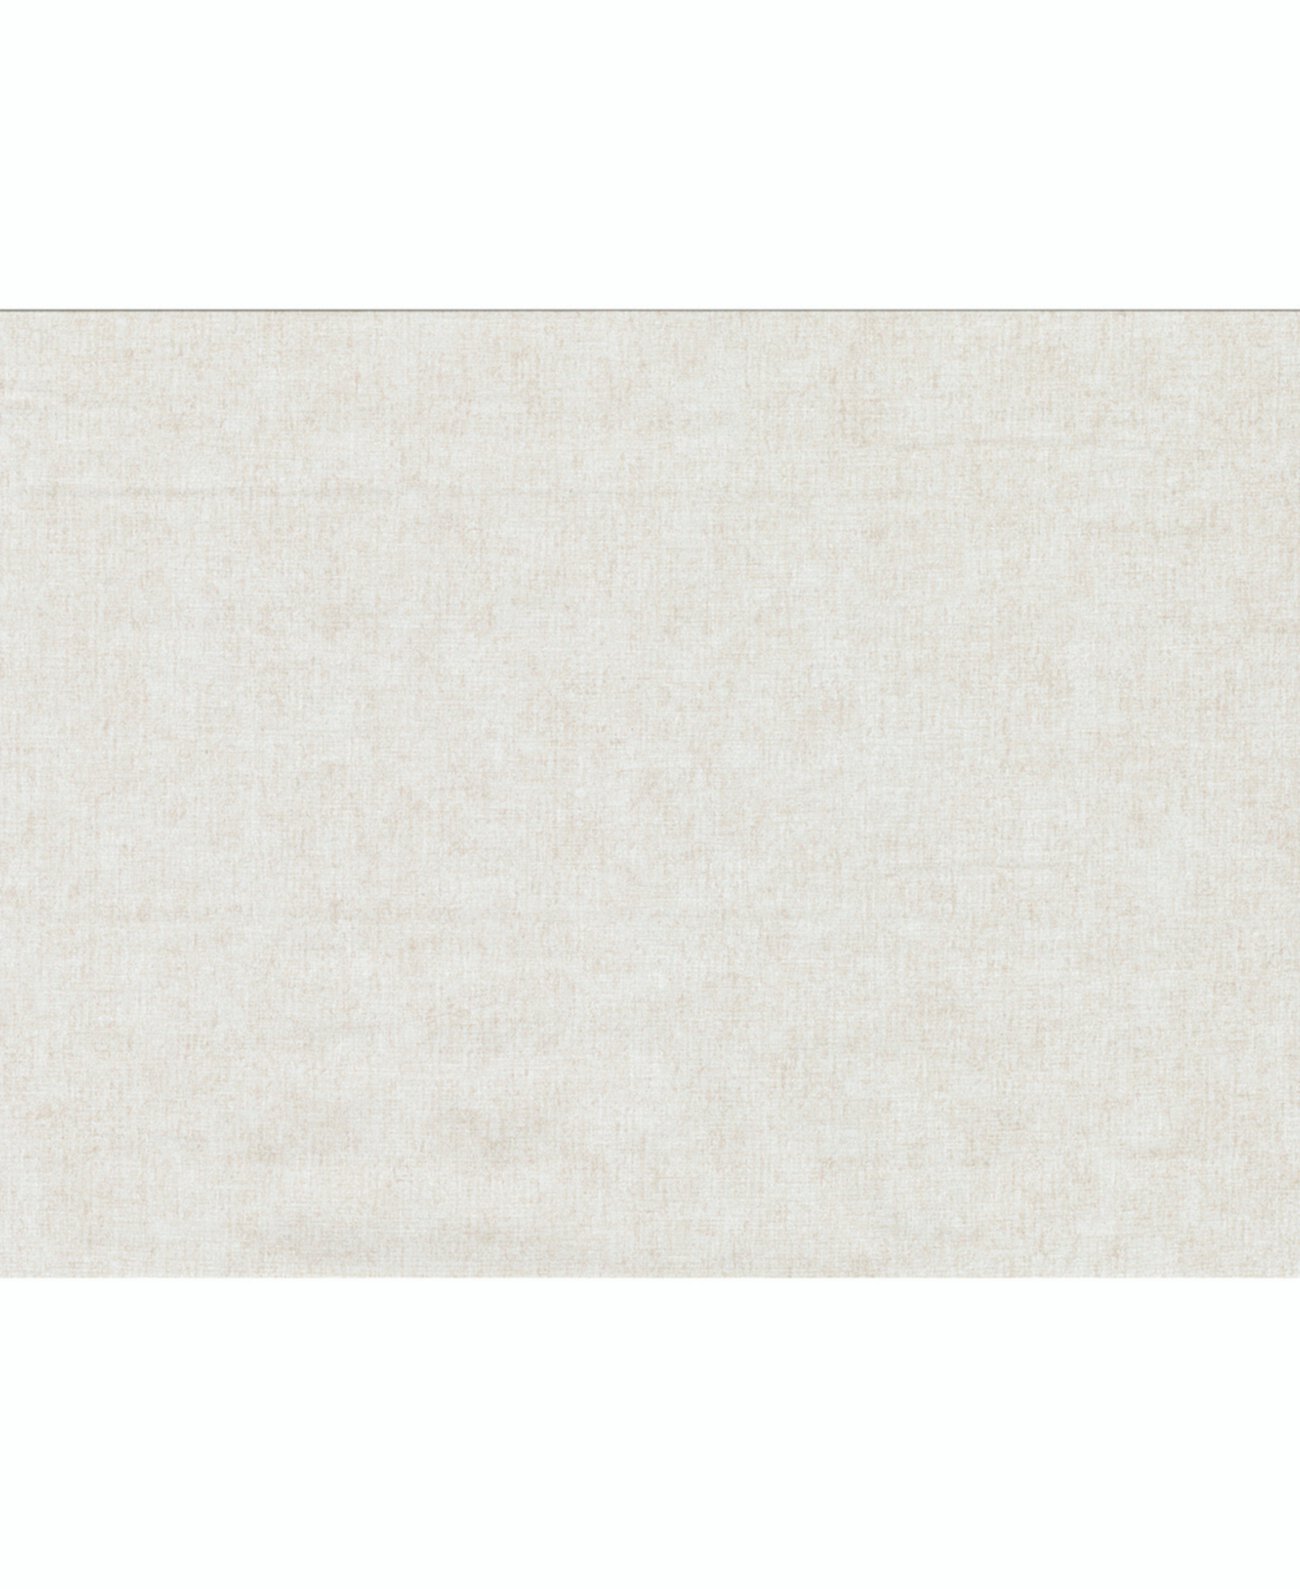 27 "x 324" обои Brienne с льняной текстурой Warner Textures